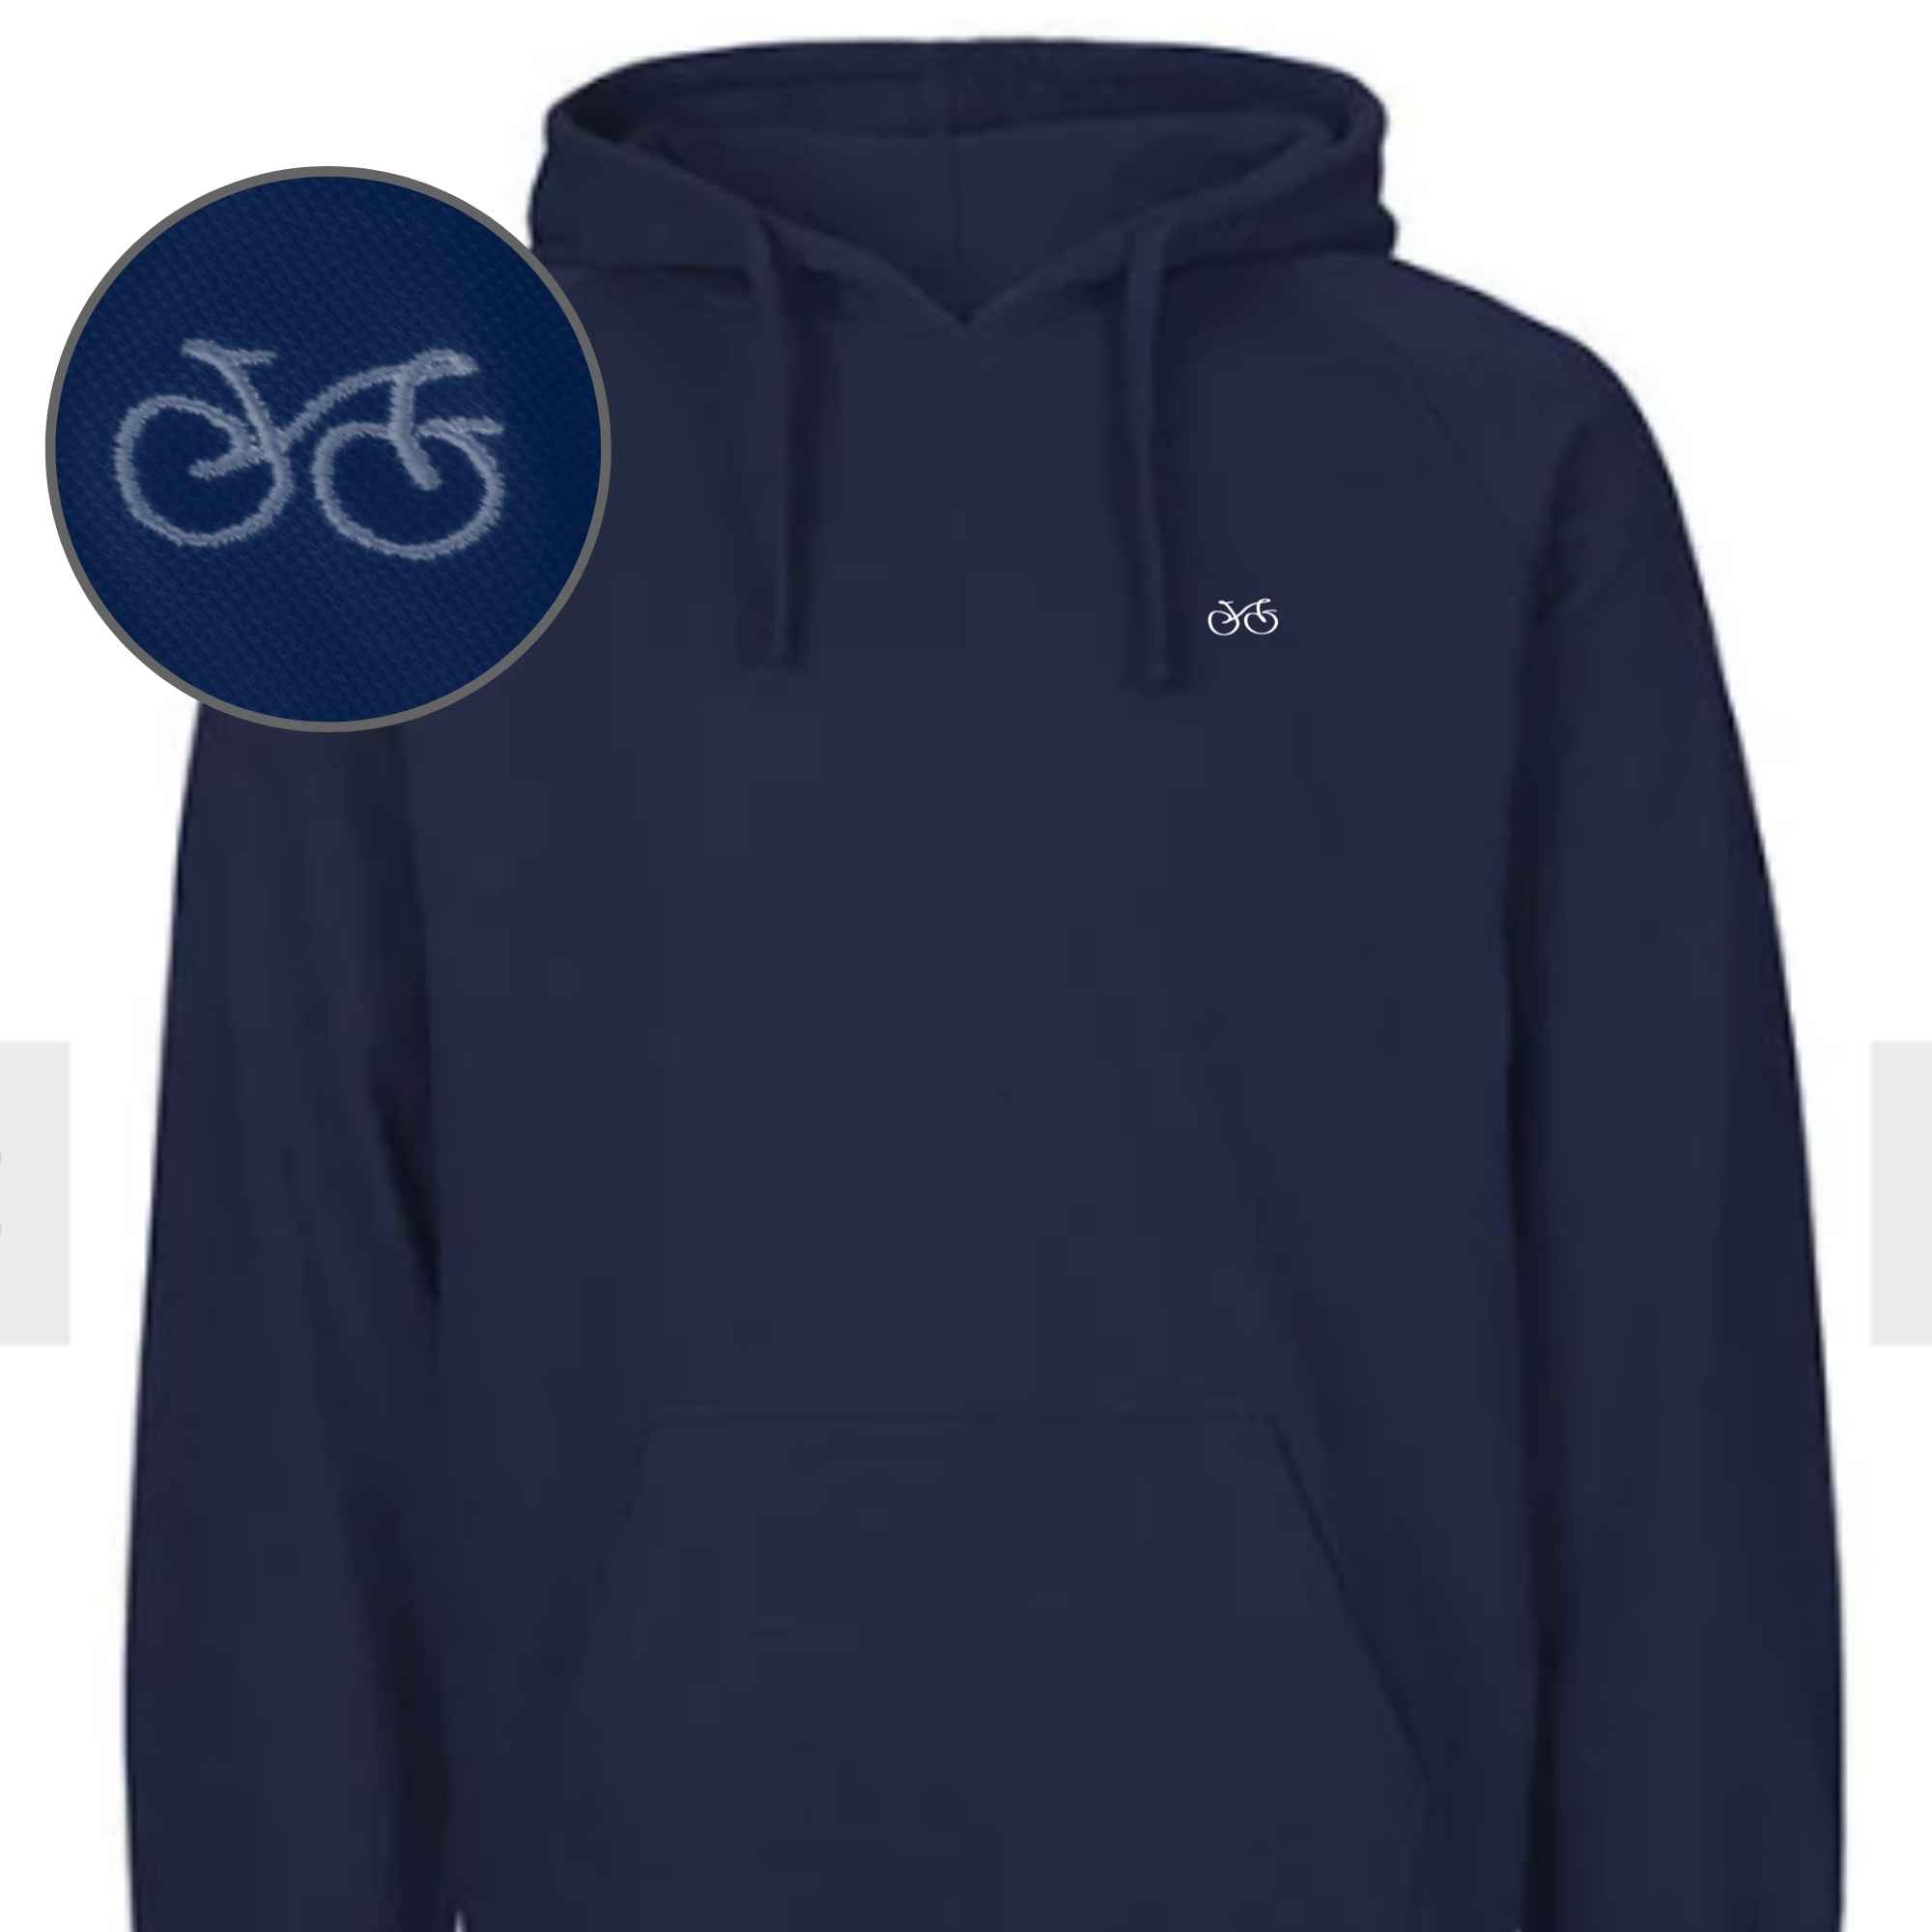 Blauer Kapuzenpullover mit hochwertigem Fahrrad-Motiv bestickt 